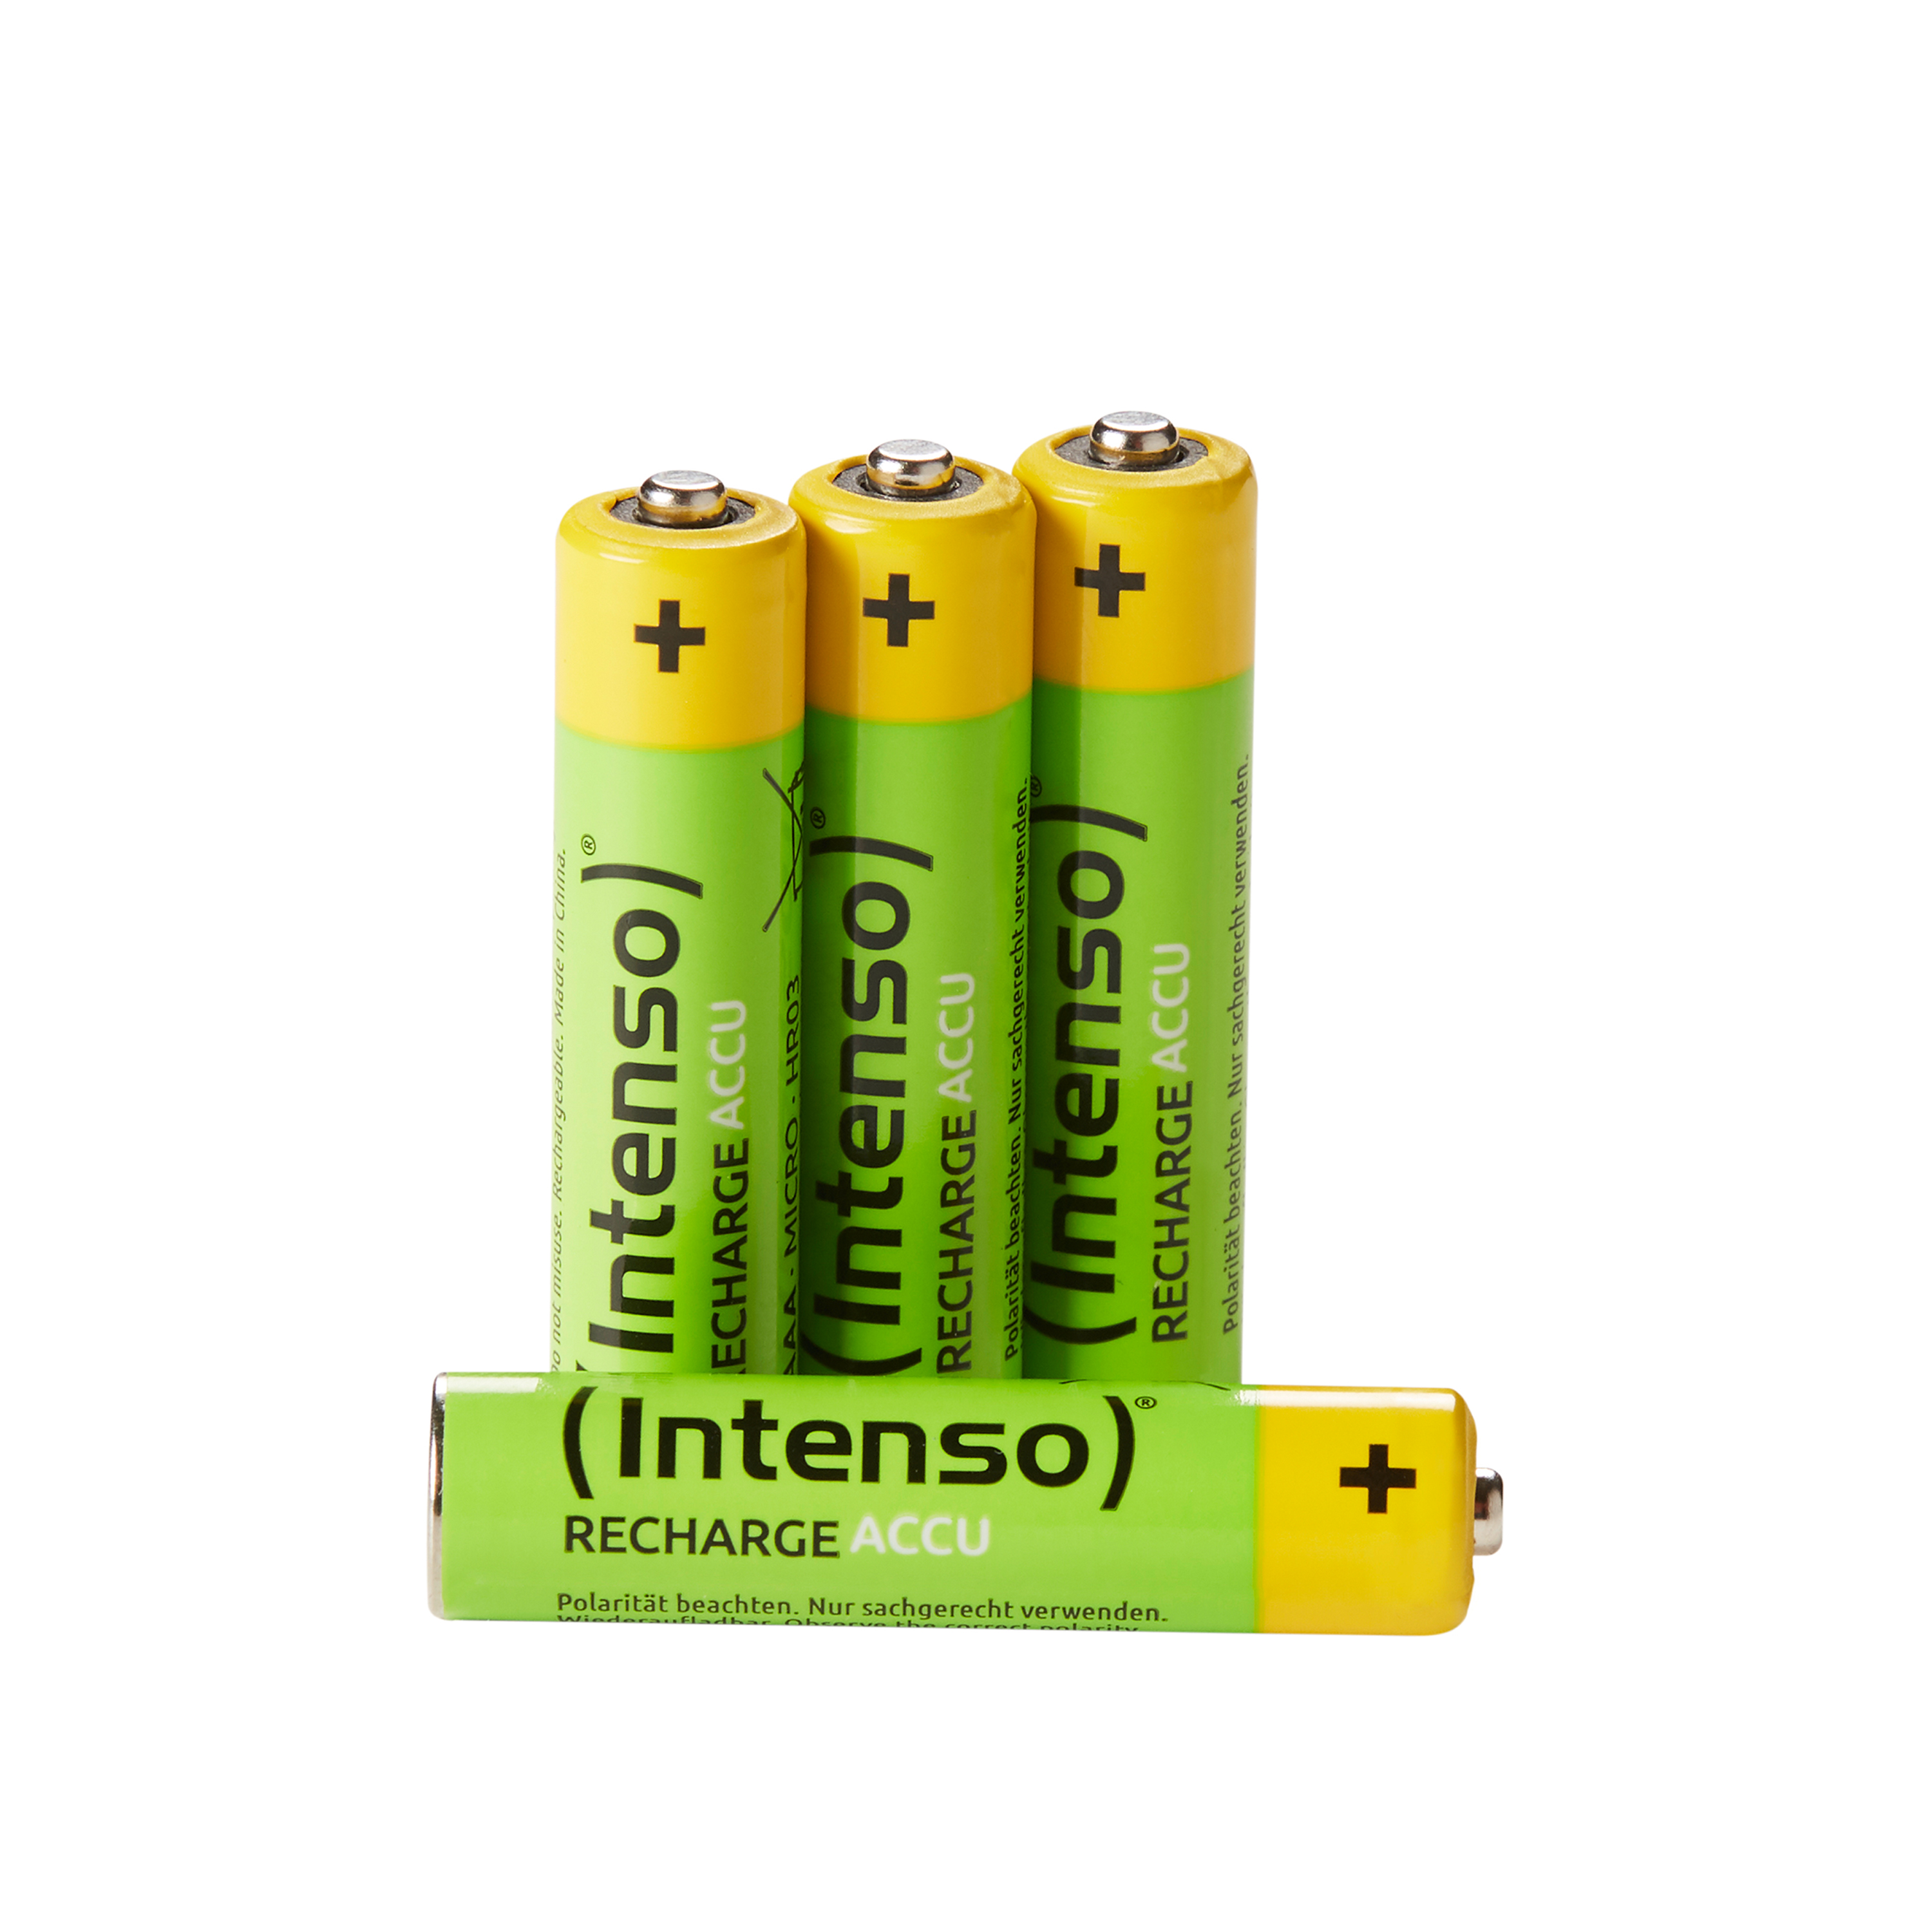 (Nickel-Metallhydrid) Batterie, HR03, HR03 INTENSO AAA, mAh Mignon, Eco Accu 4er NiMH AAA 850 Wiederaufladbare Batterie Energy mAh 850 Pack